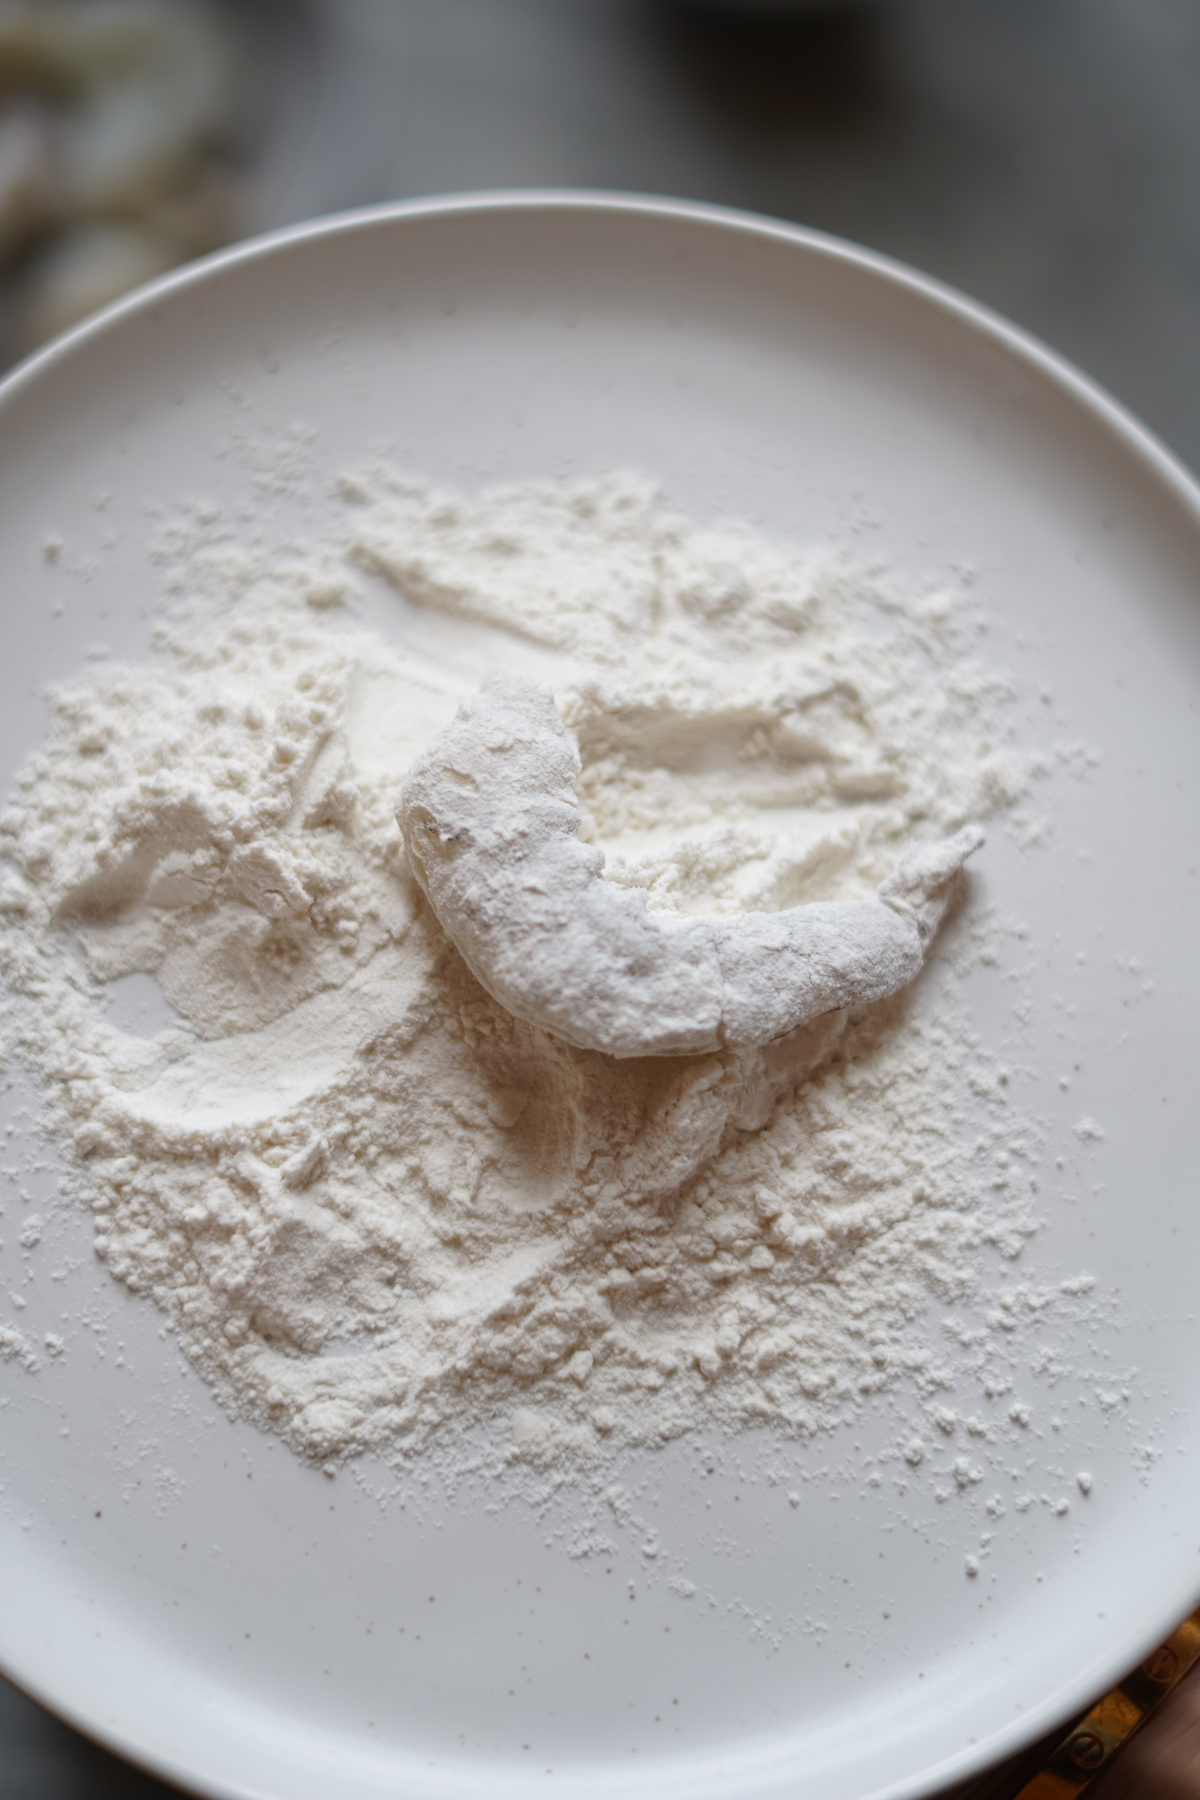 A plate of flour with a coated shrimp.